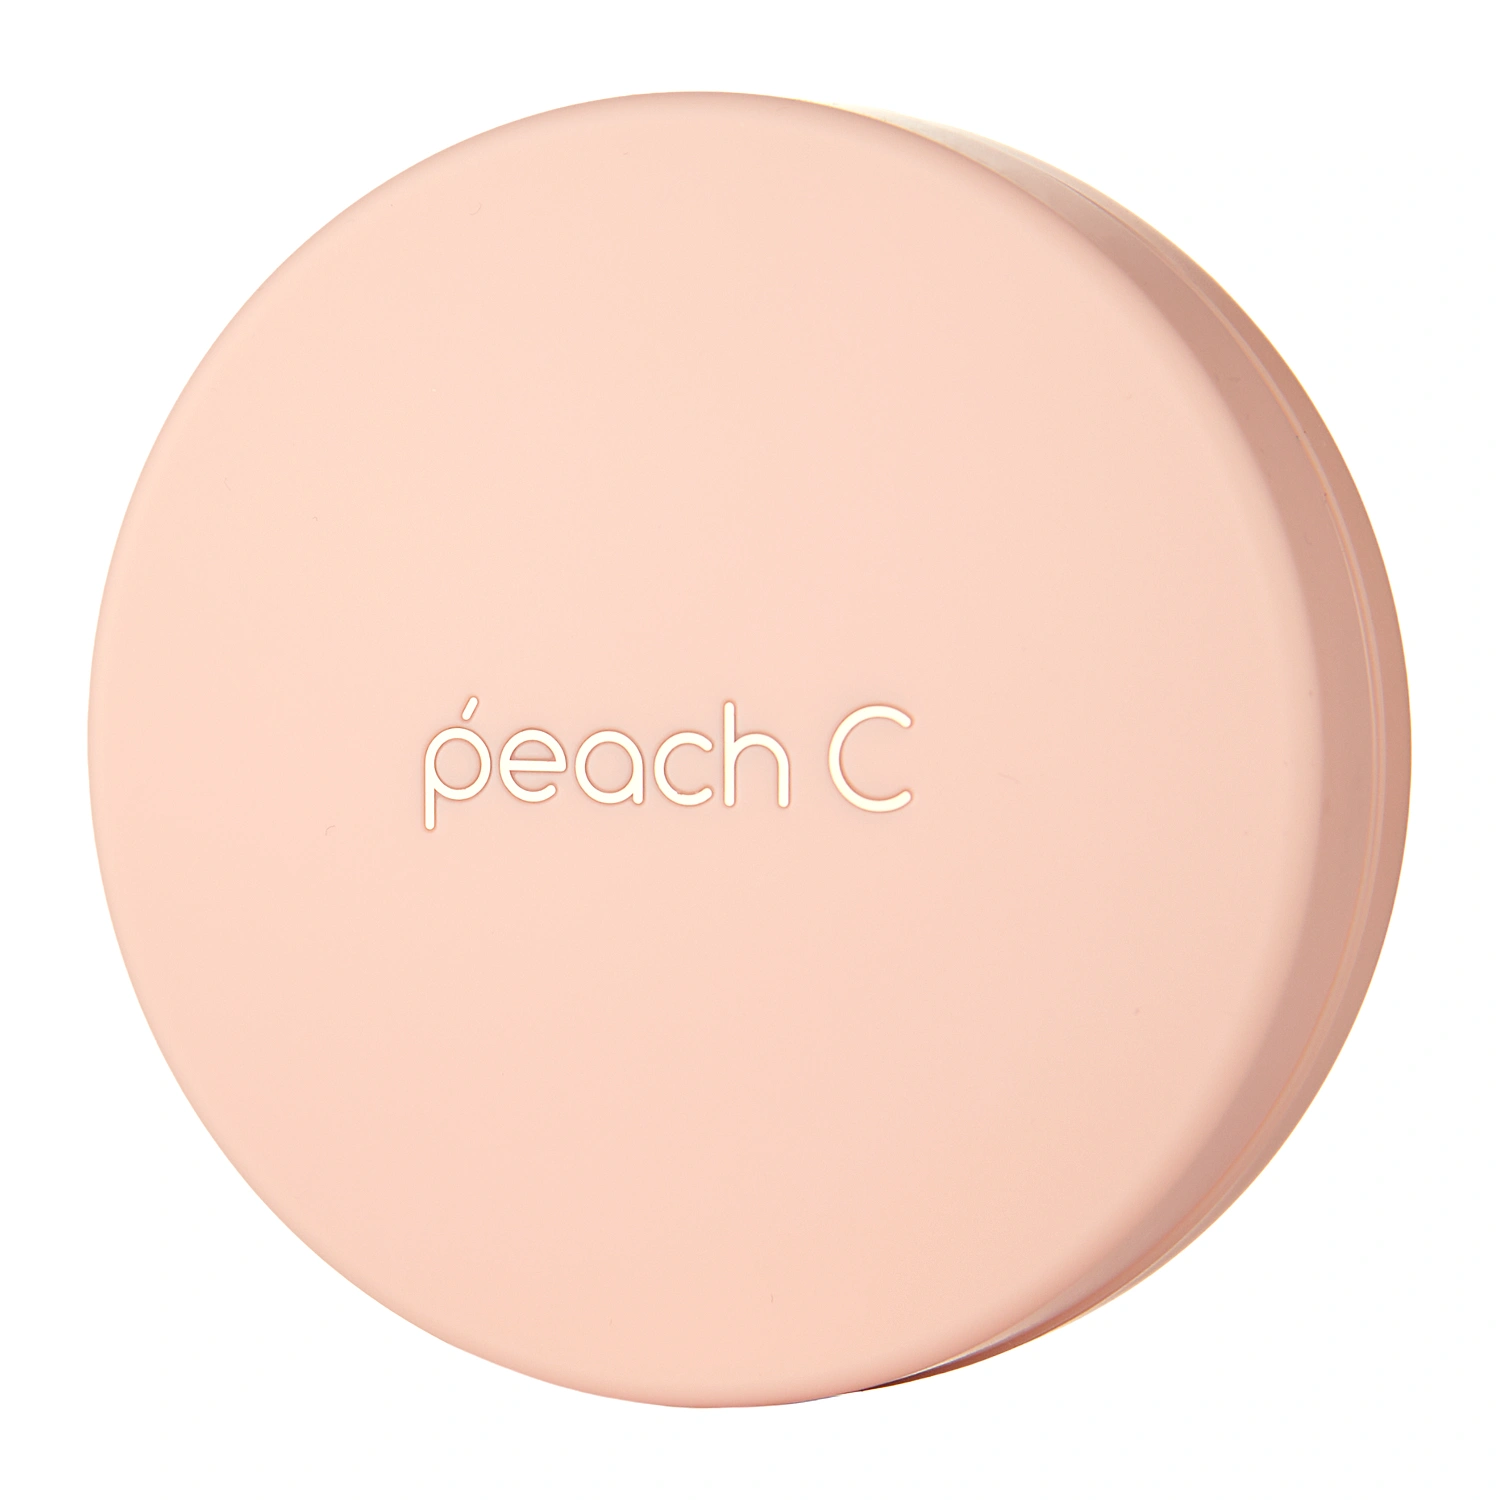 Peach C - Honey Glow Cover Cushion SPF50 PA++++ - Сияющий тональный кушон - #01 Ivory - 15g